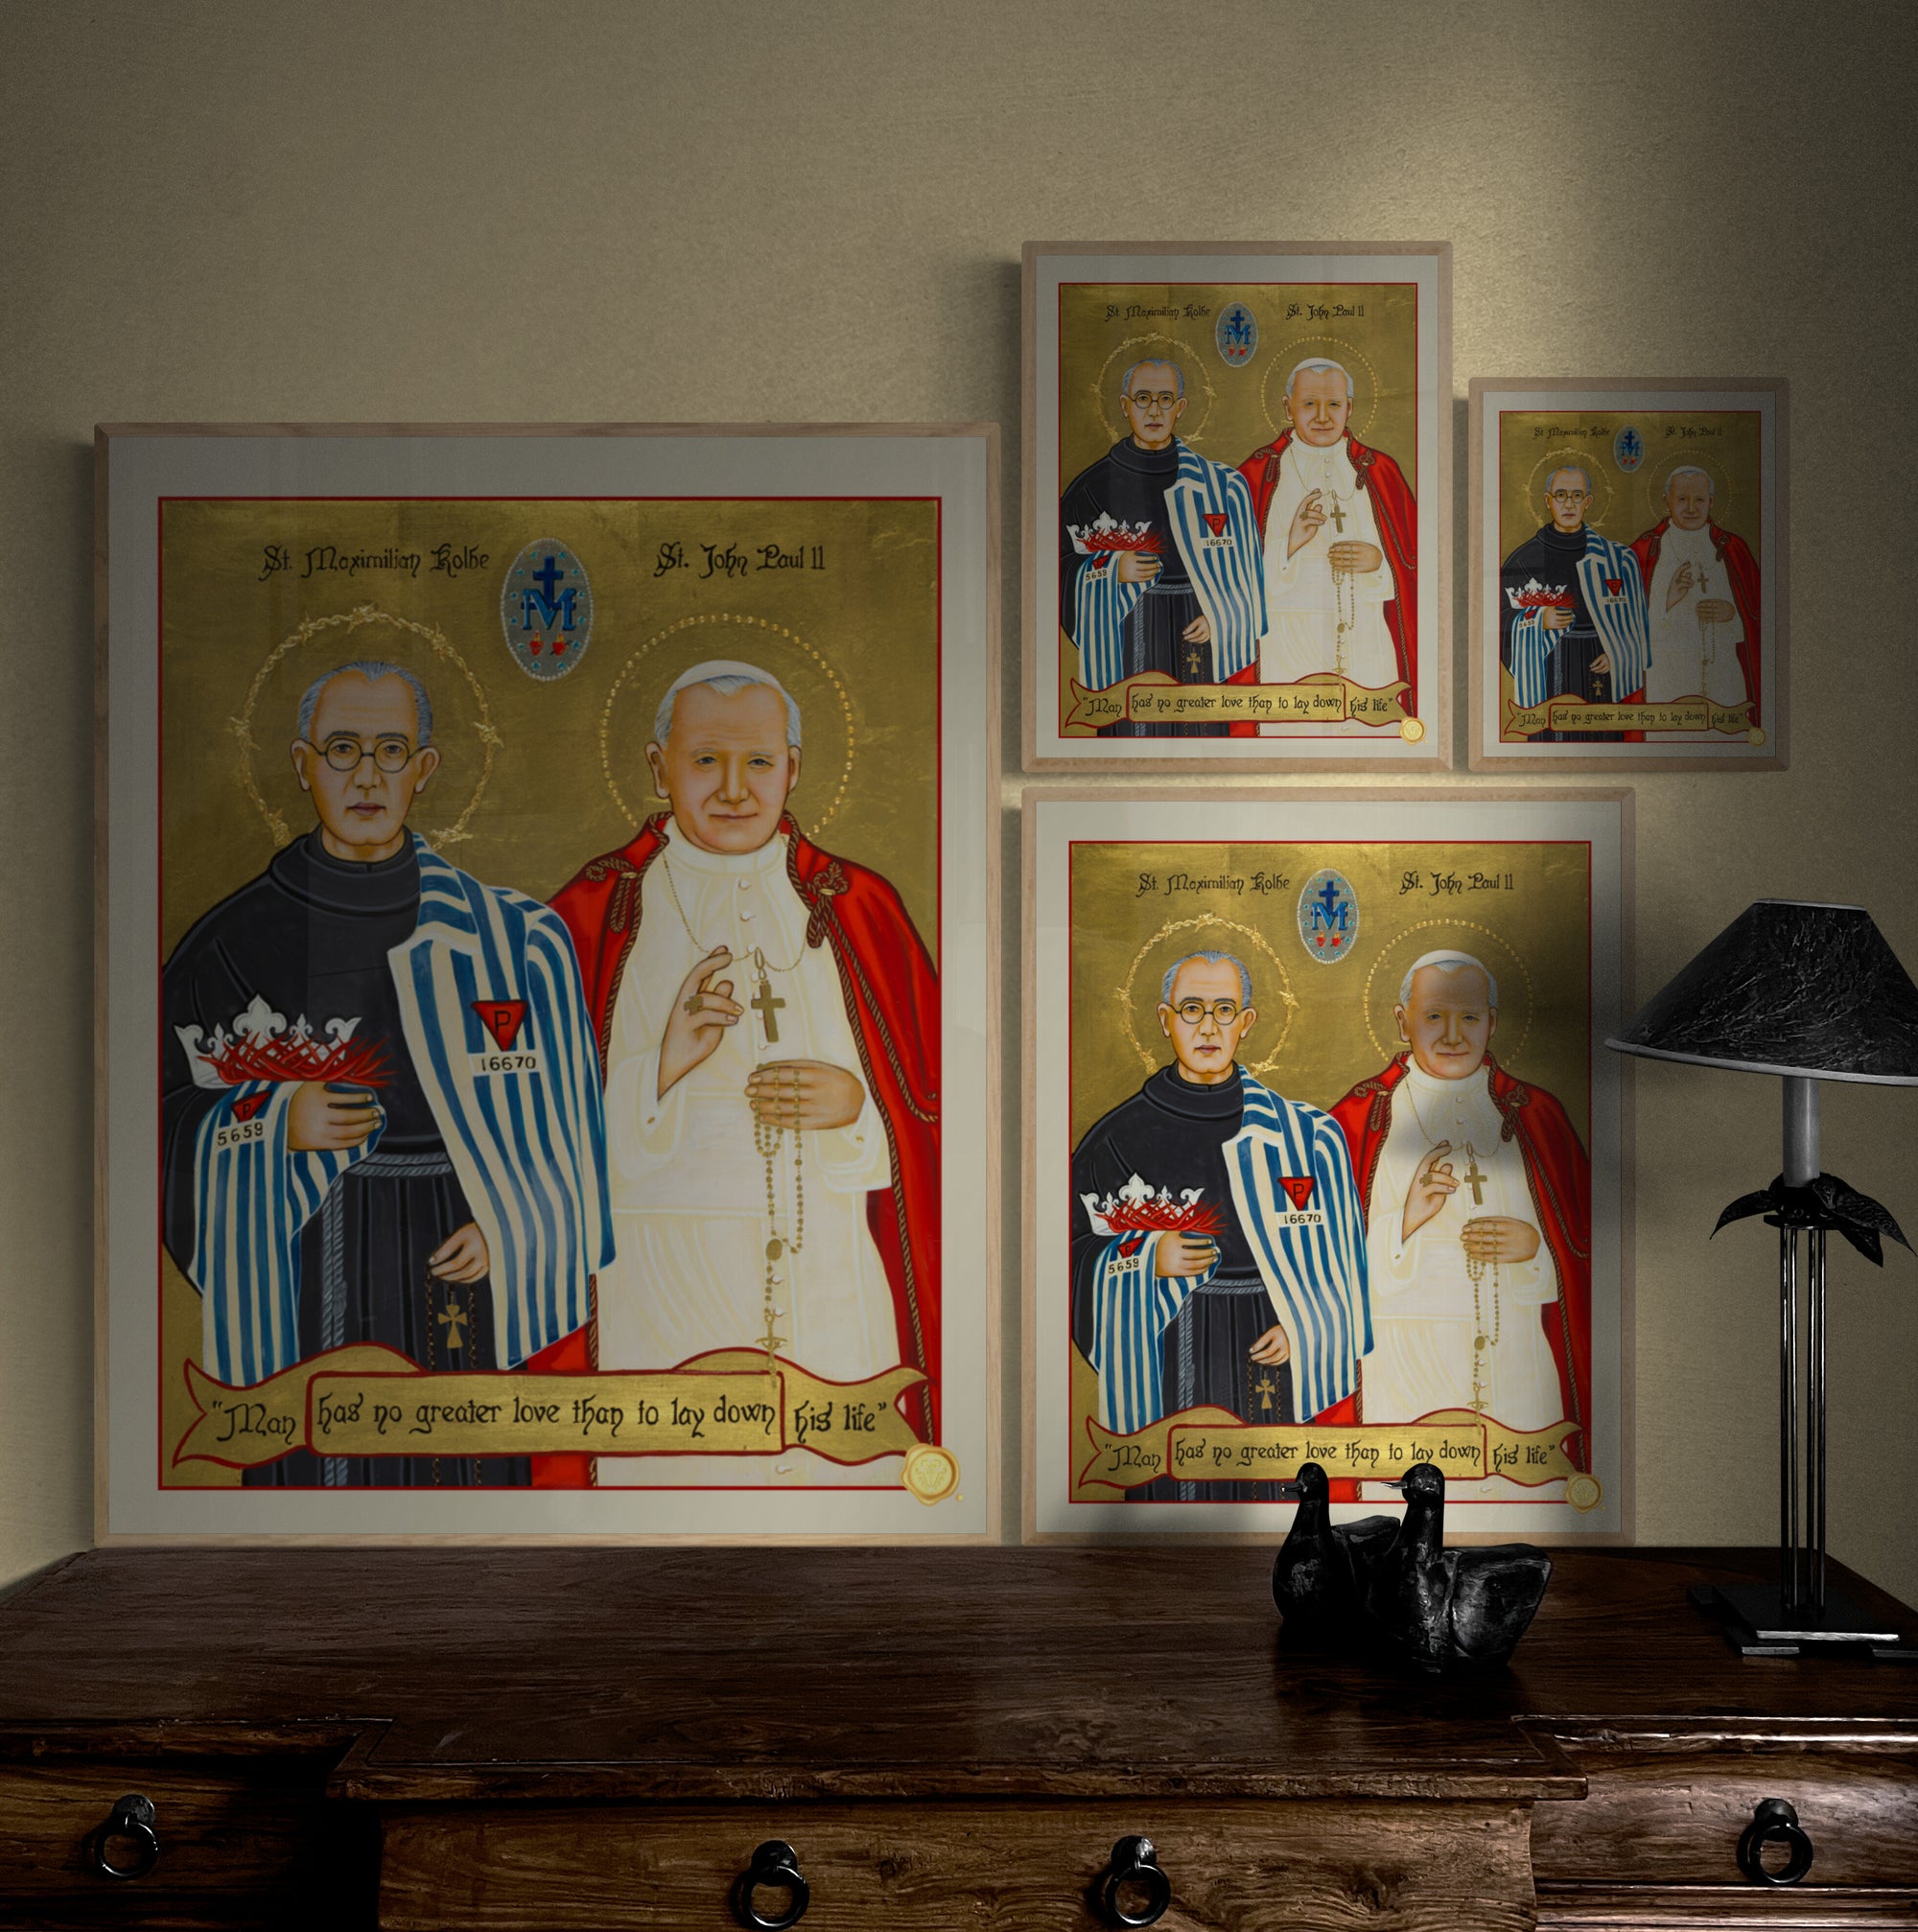 Saint Maximillian & Saint John Paul II Icon Print